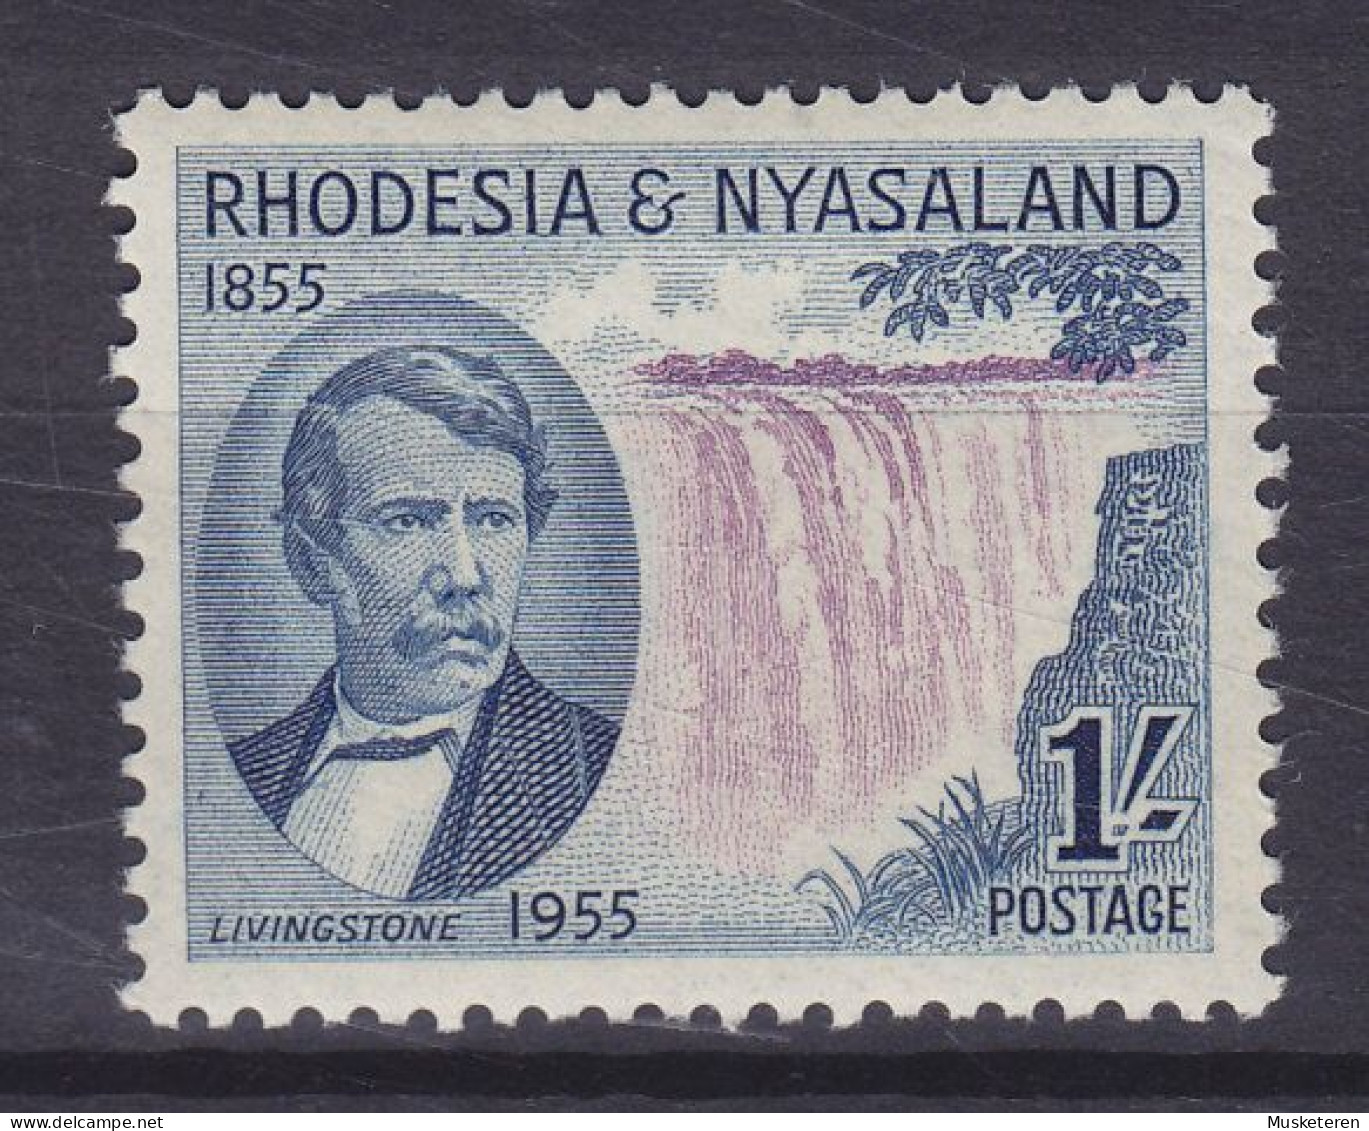 Rhodesia & Nyassaland 1955 Mi. 18, 1 Sh. David Livingstone & Victoria Falls, MNH** - Rhodésie & Nyasaland (1954-1963)